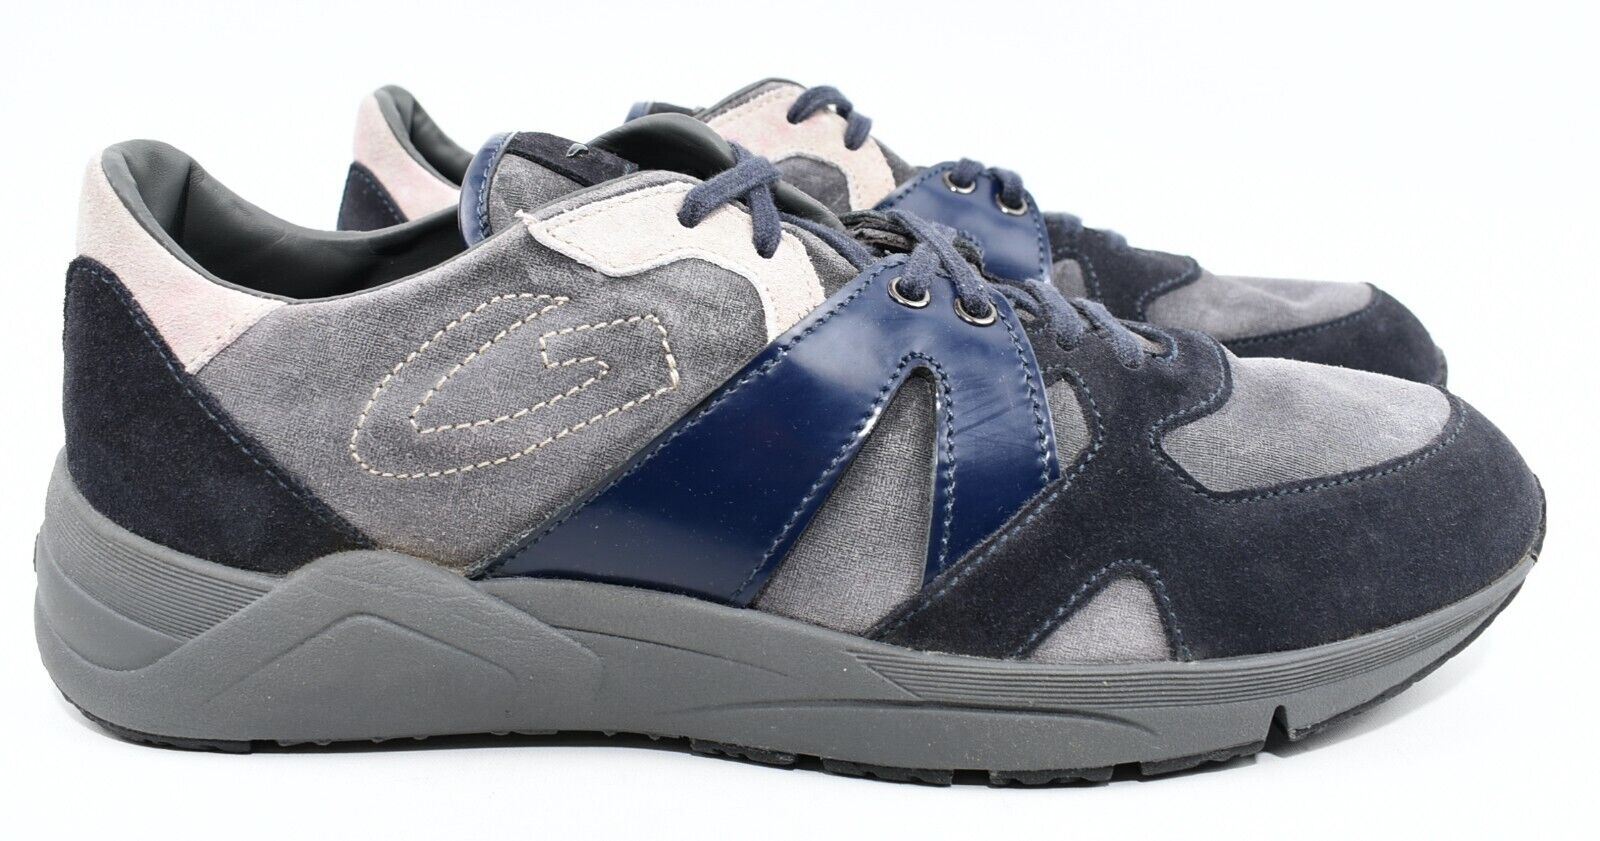 GUARDIANI SPORT Mens Sneakers Trainers, Grey/Navy Blue, size UK 10 /EU 44